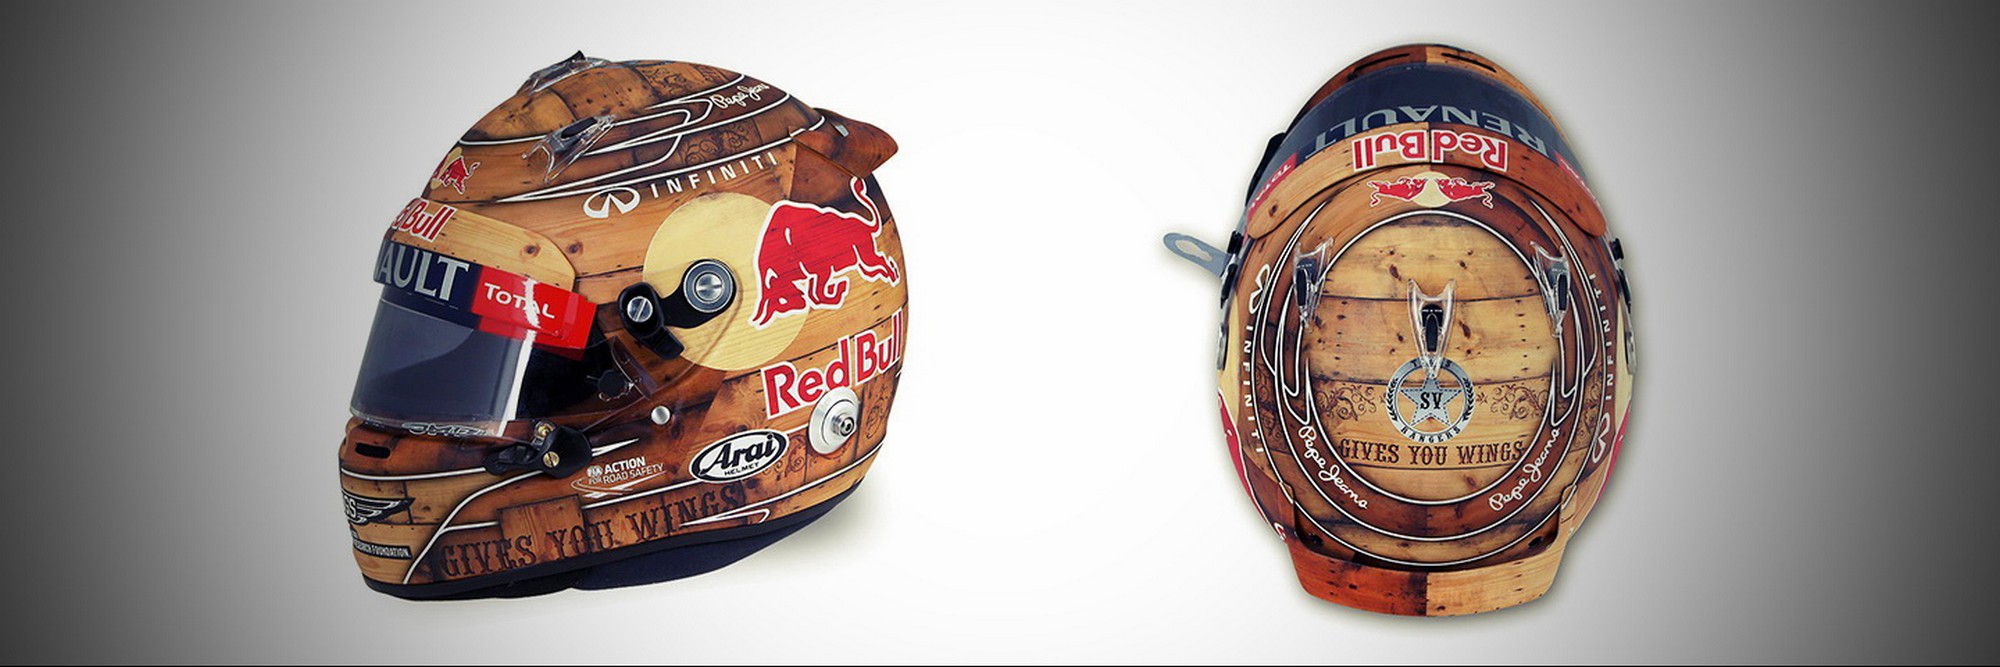 Шлем Себастьяна Феттеля на Гран-При США 2012 | 2012 USA Grand Prix helmet of Sebastian Vettel